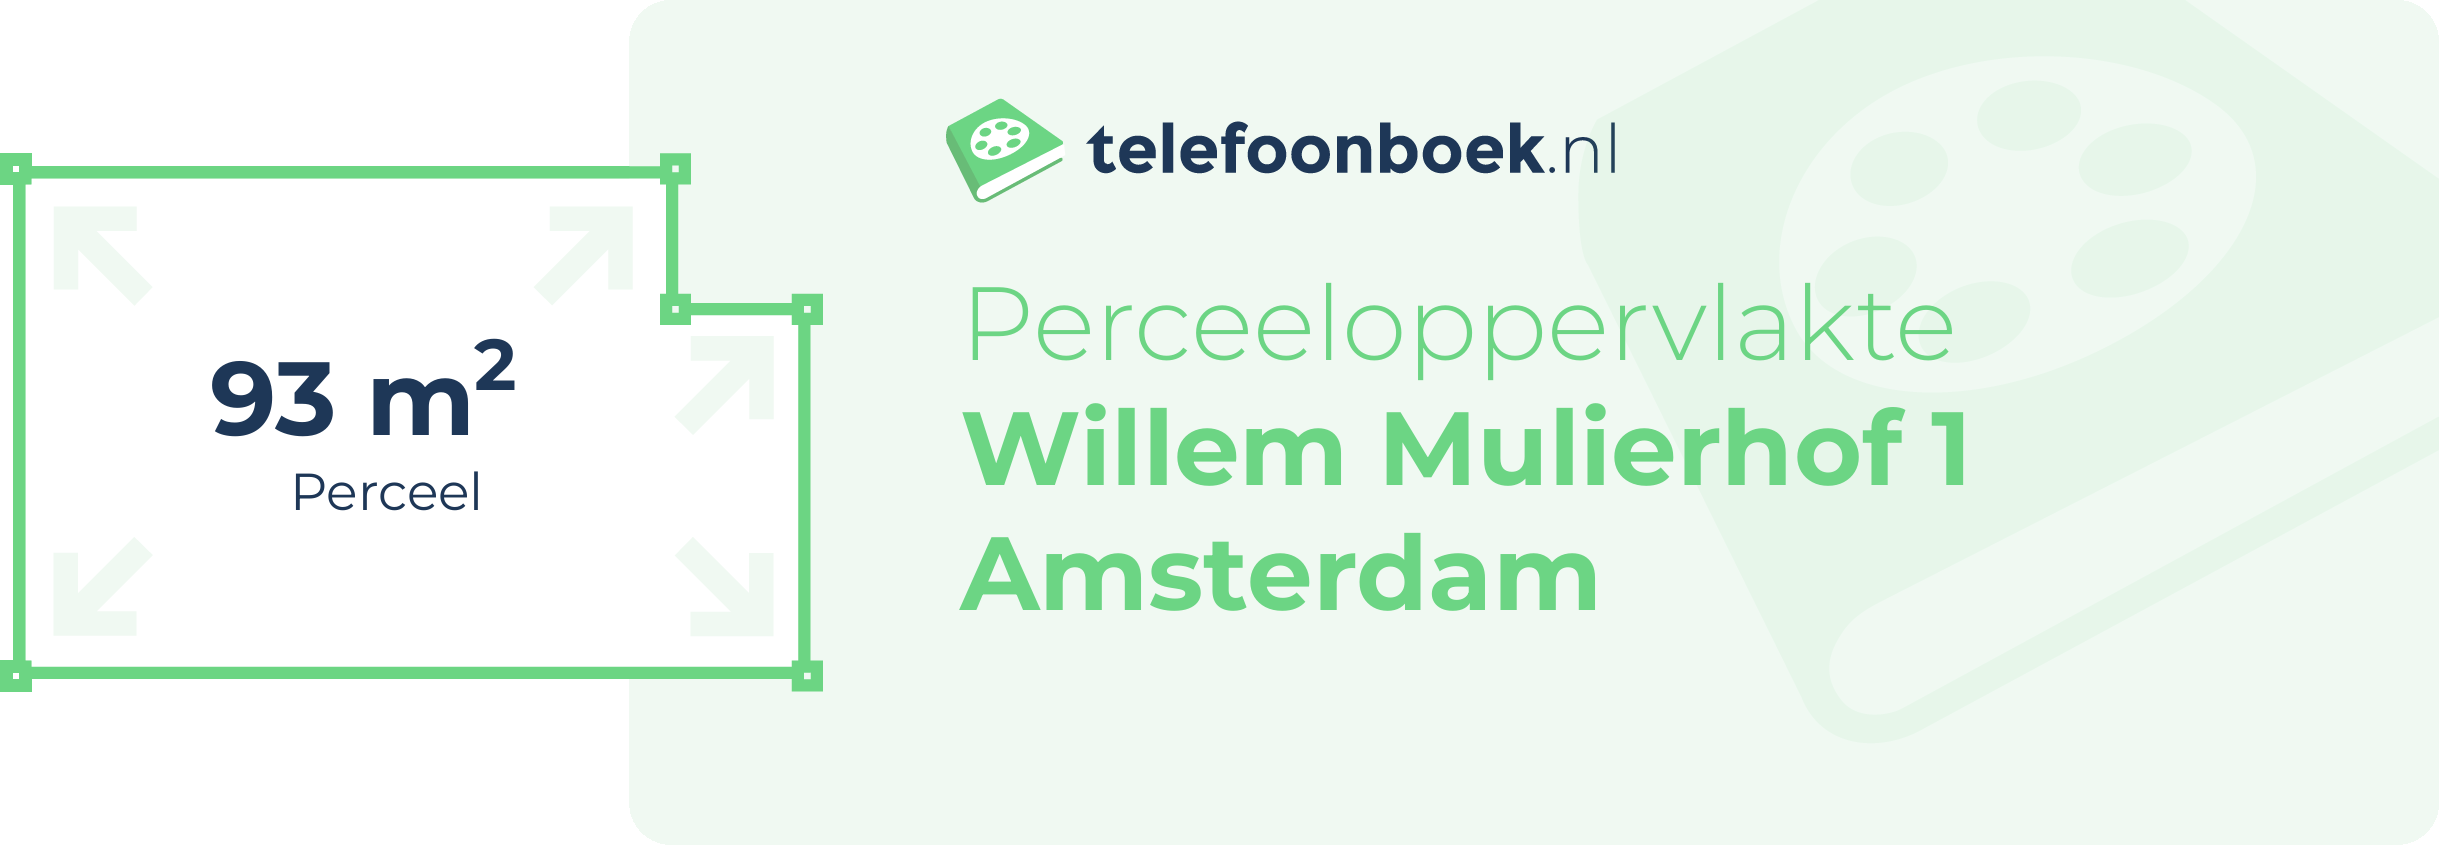 Perceeloppervlakte Willem Mulierhof 1 Amsterdam